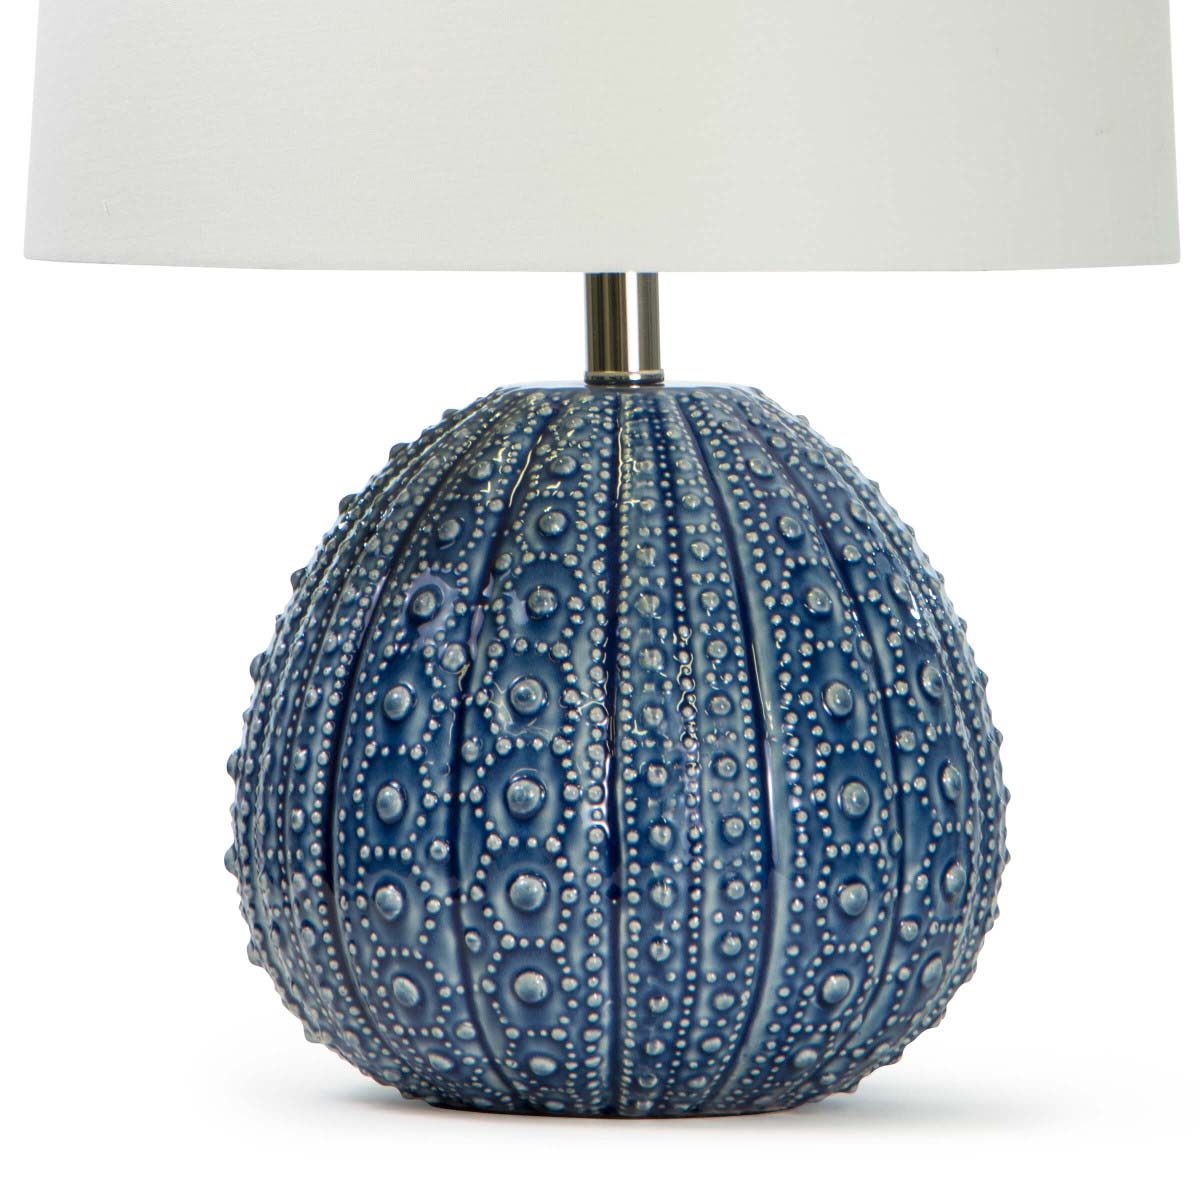 Regina Andrew Sanibel Ceramic Table Lamp (Blue)